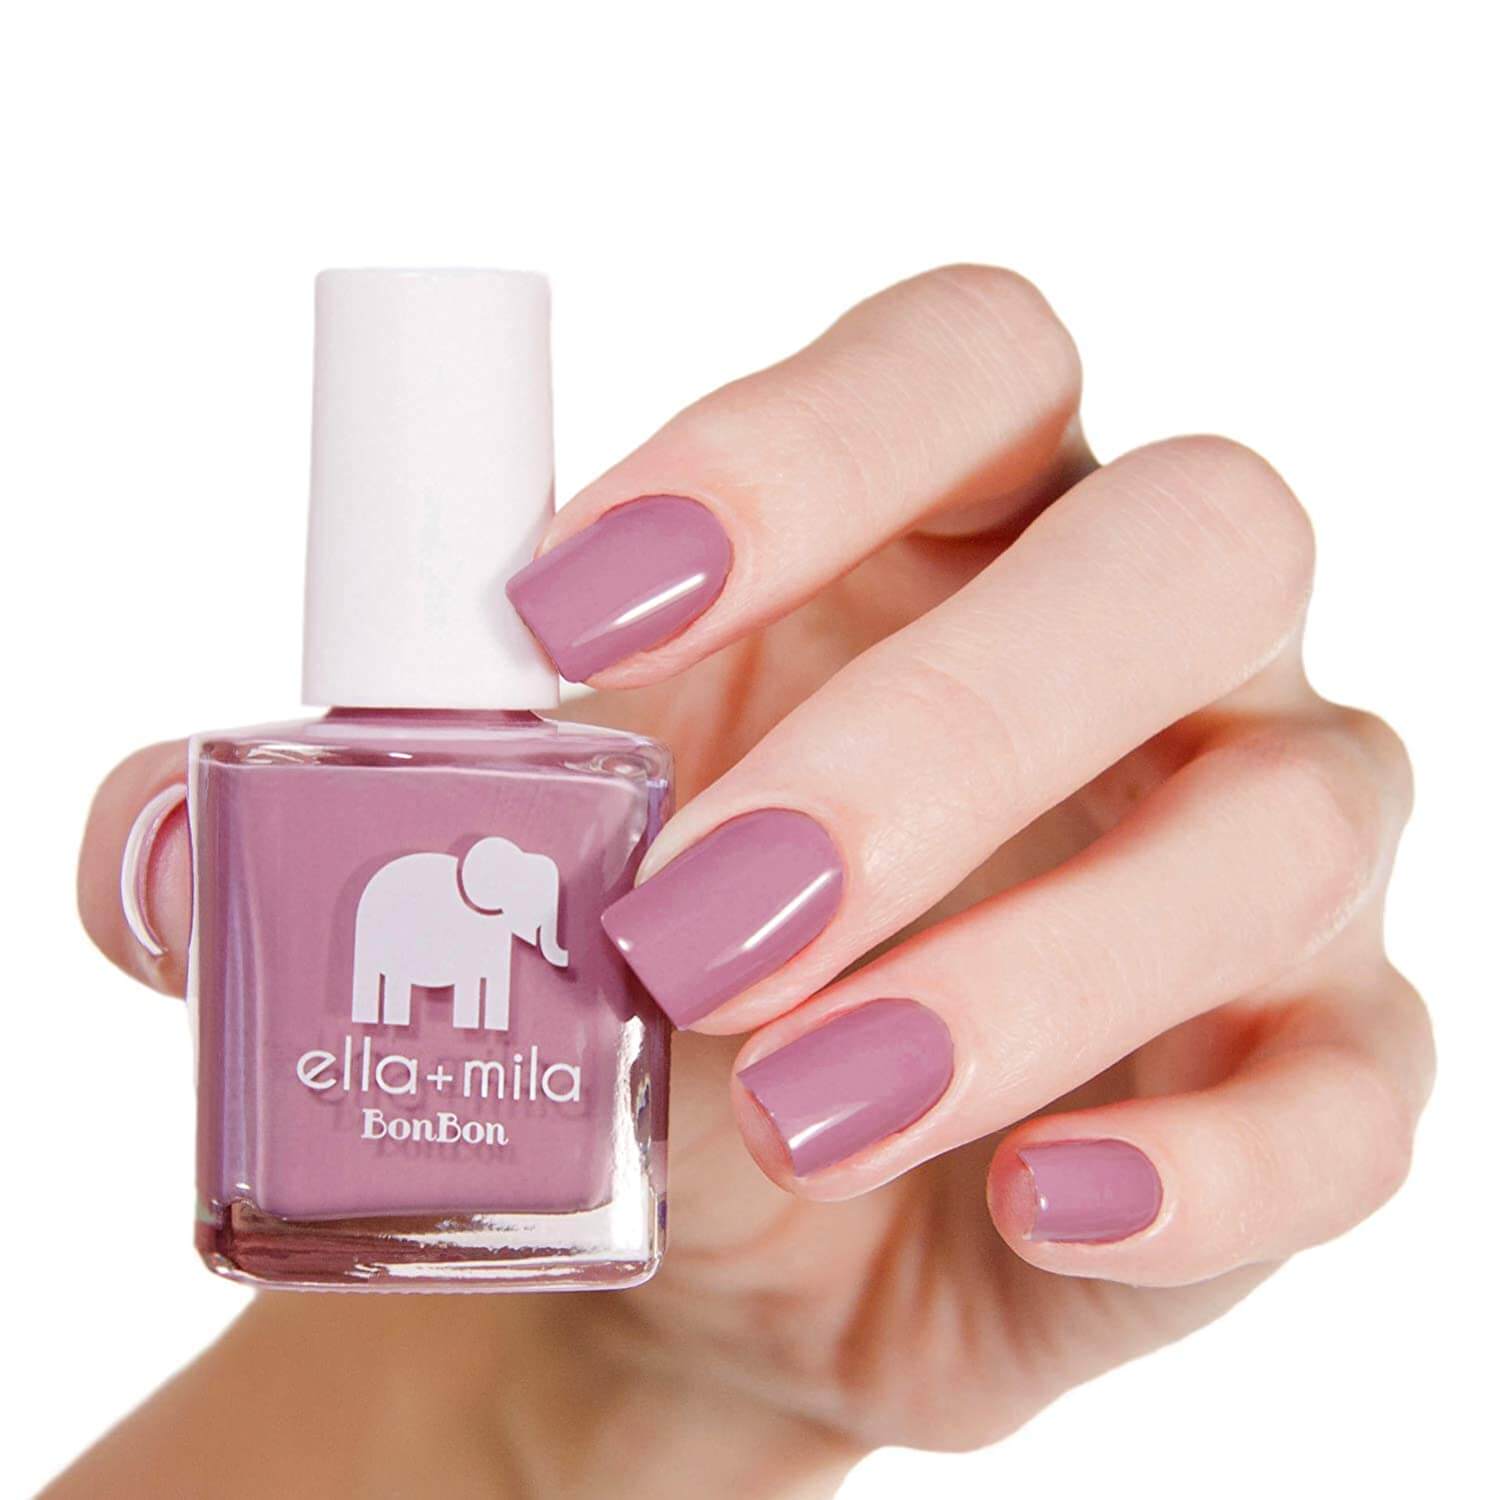 woman's hand with pink nails holding pink nail polish